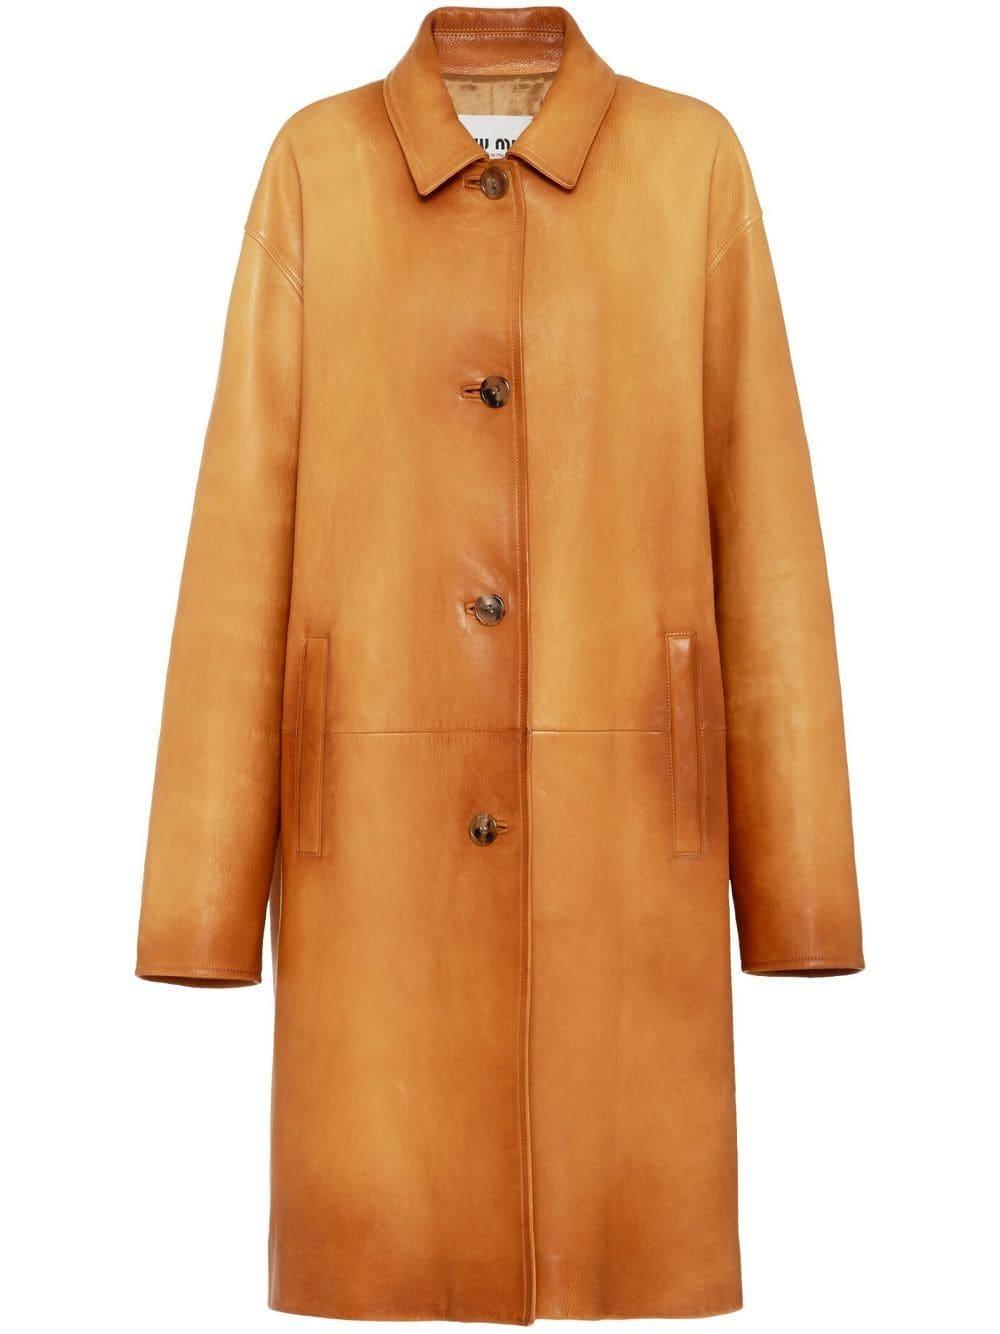 Miu Miu Nappa Leather Coat in Orange | Lyst